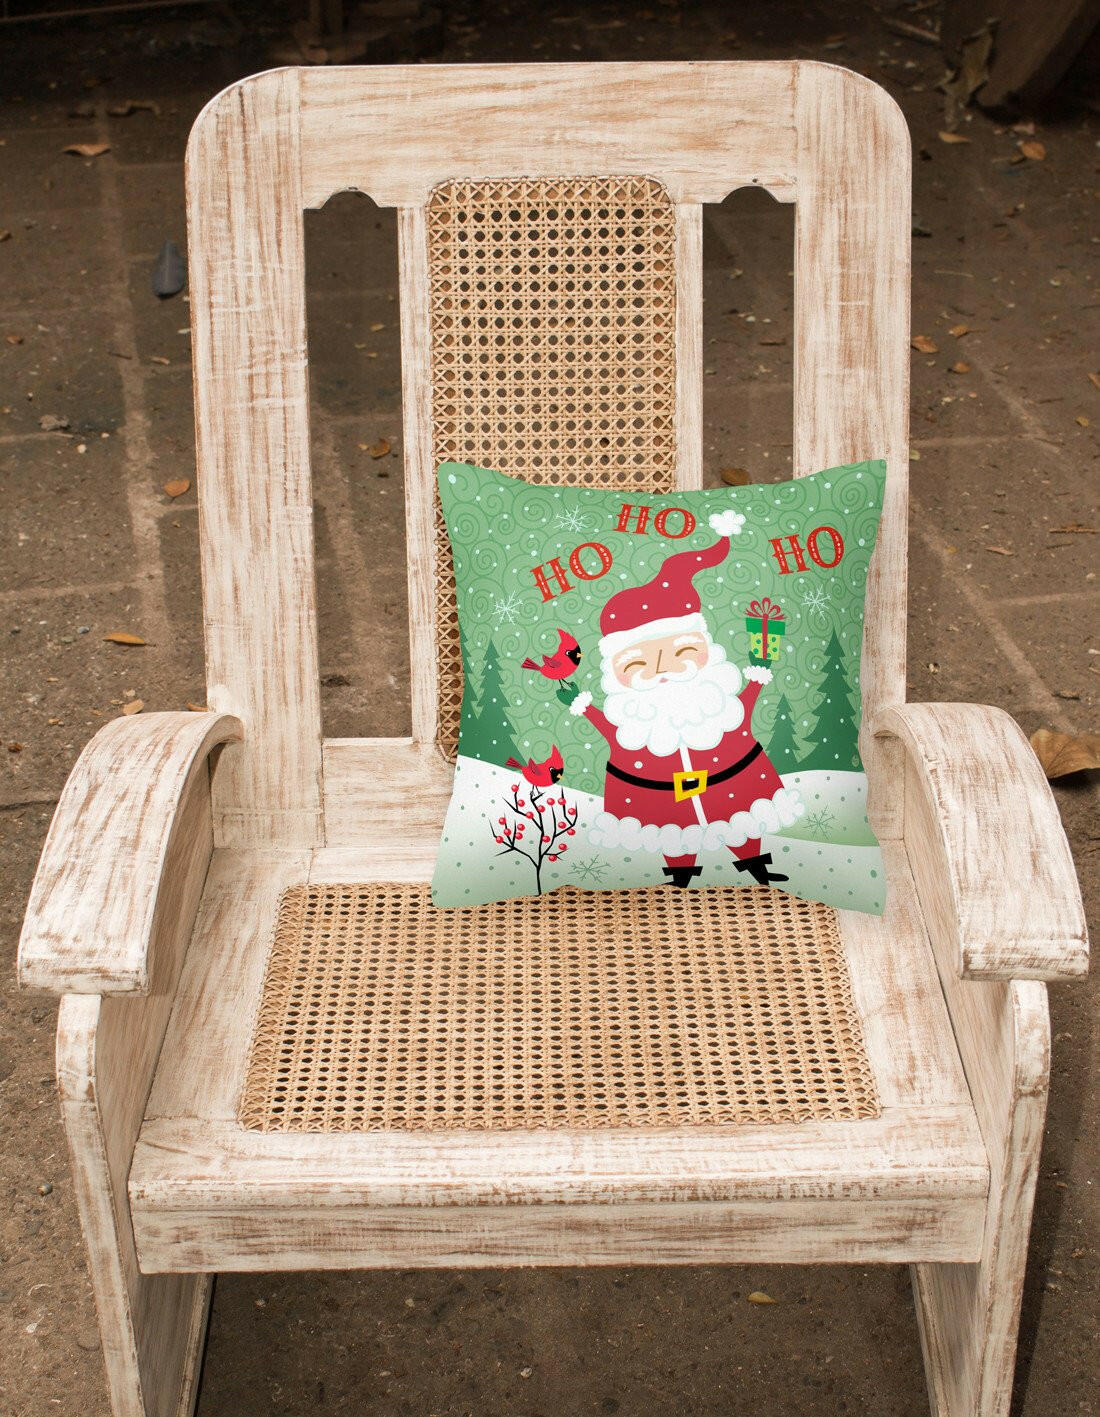 Merry Christmas Santa Claus Ho Ho Ho Fabric Decorative Pillow VHA3016PW1414 by Caroline's Treasures